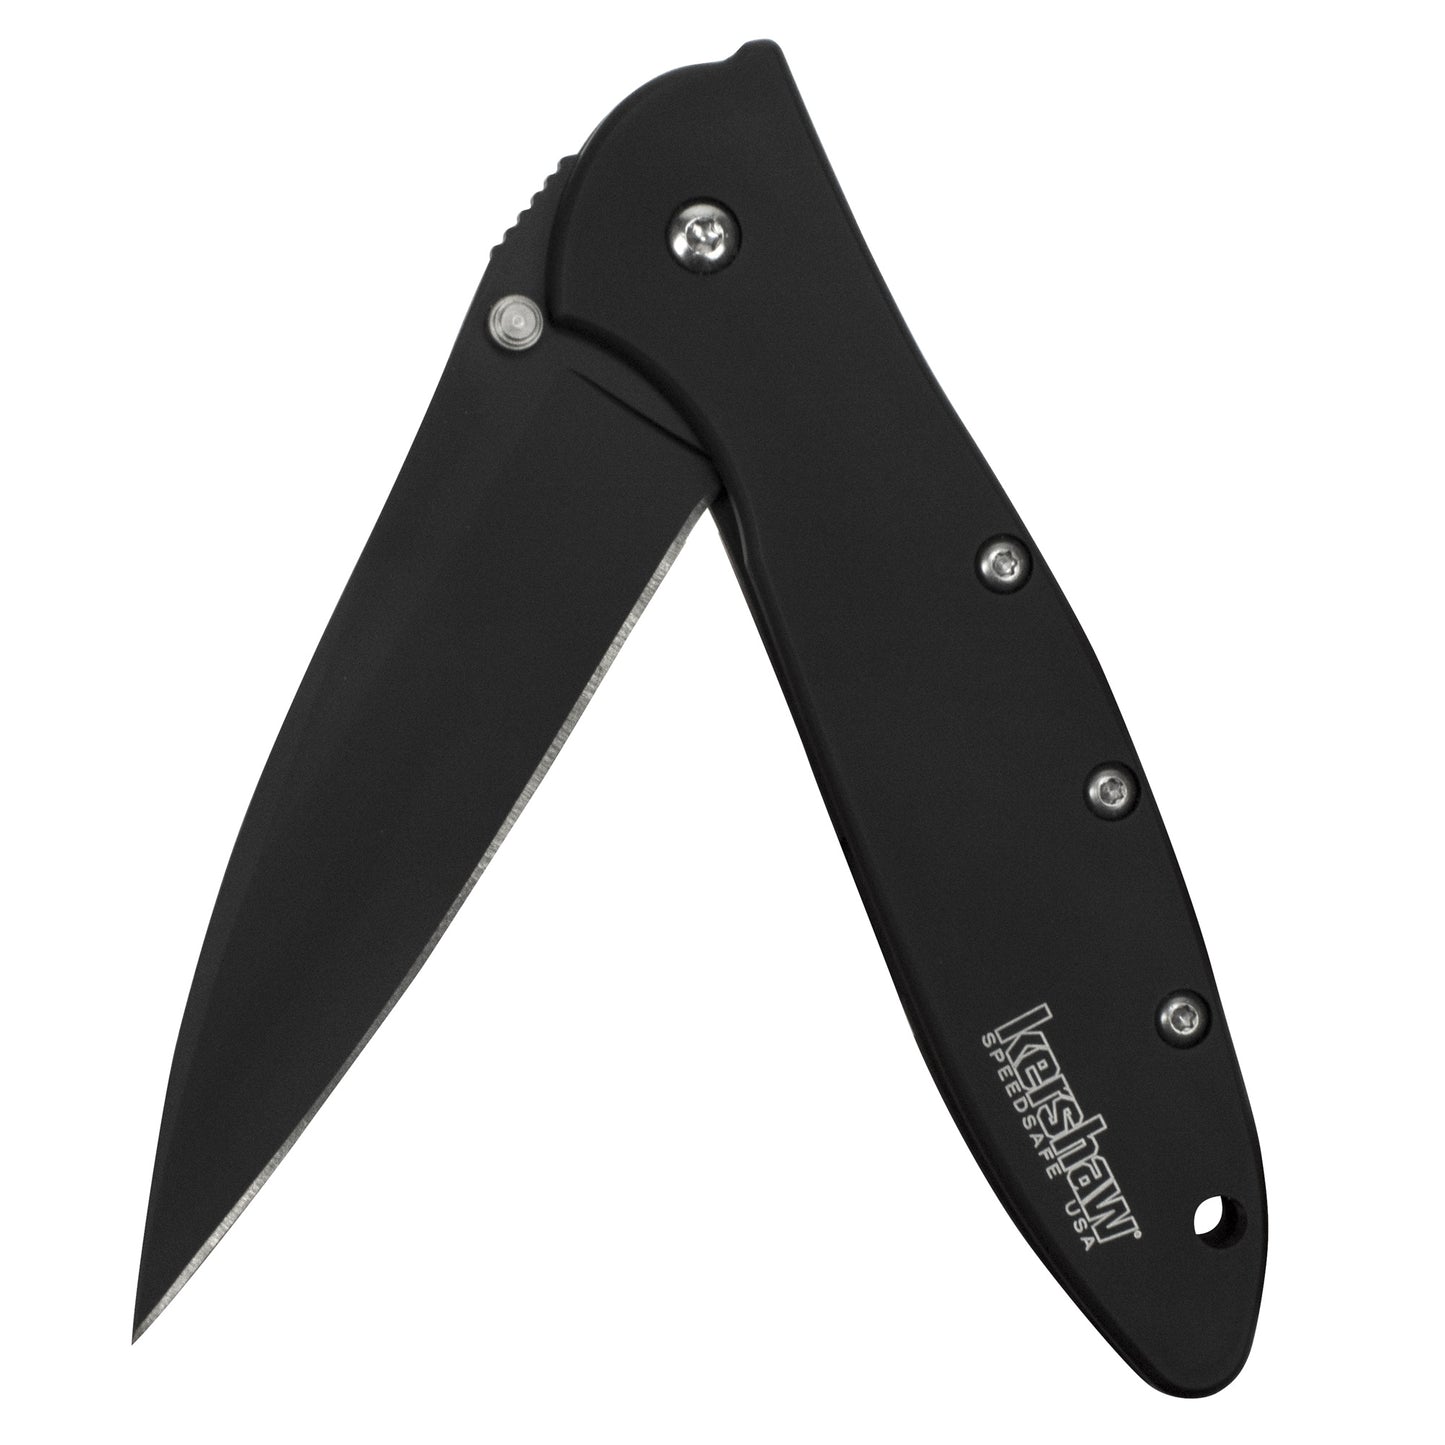 Kershaw Leek Black Folding Knife (1660CKT); 3” Steel Blade, Stainless Steel Handle, Both are DLC-Coated; SpeedSafe Assisted Opening, Liner Lock, Tip Lock, Reversible Pocketclip